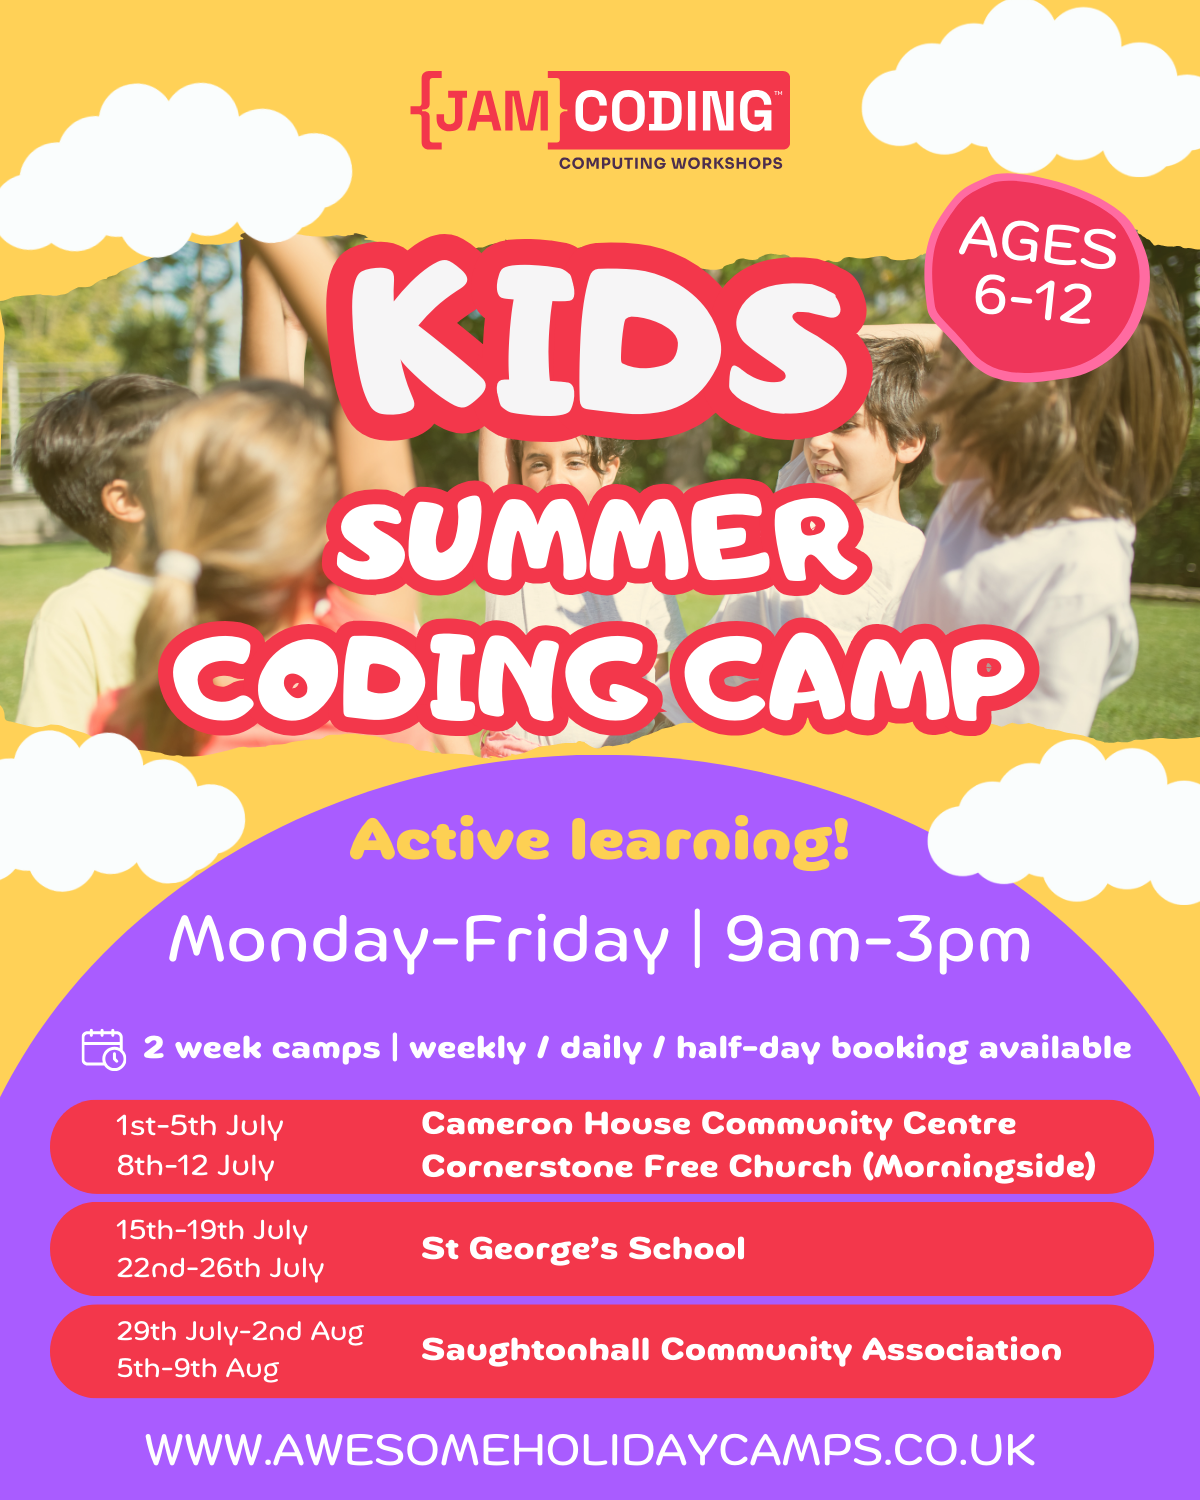 Coding Summer Camp in Morningside, Edinburgh